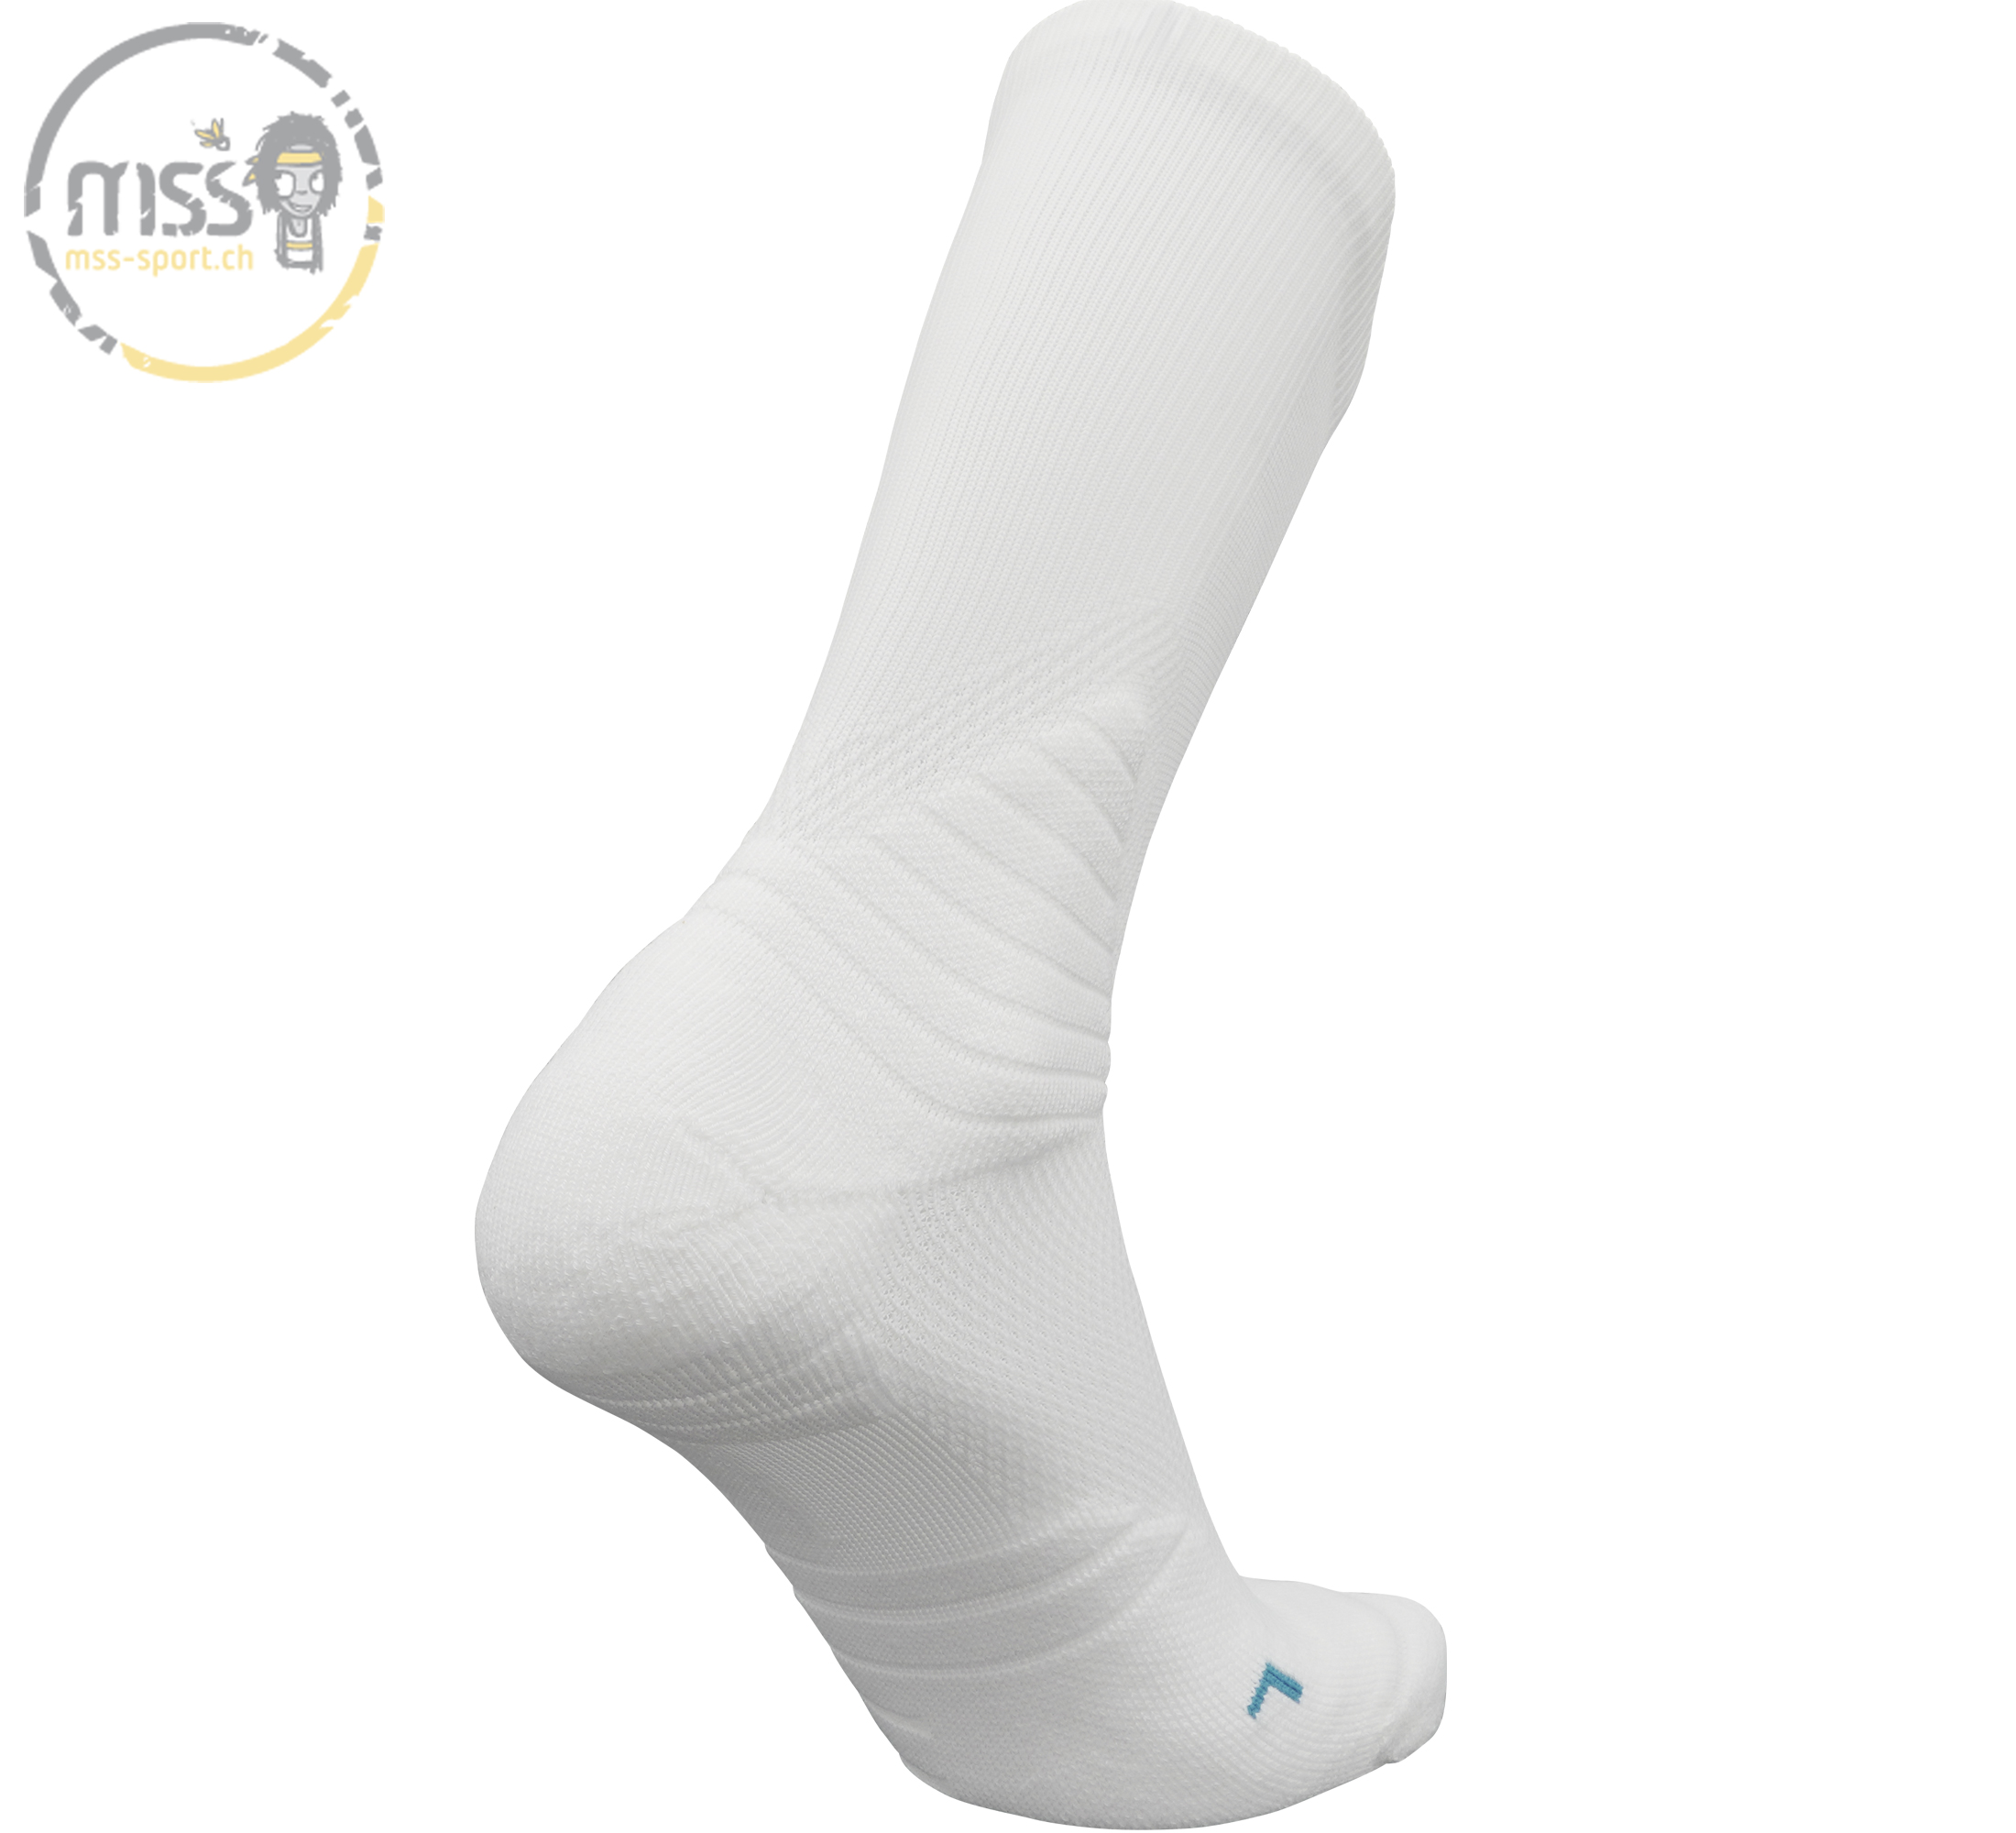 mss-socks Smash 5700 high white